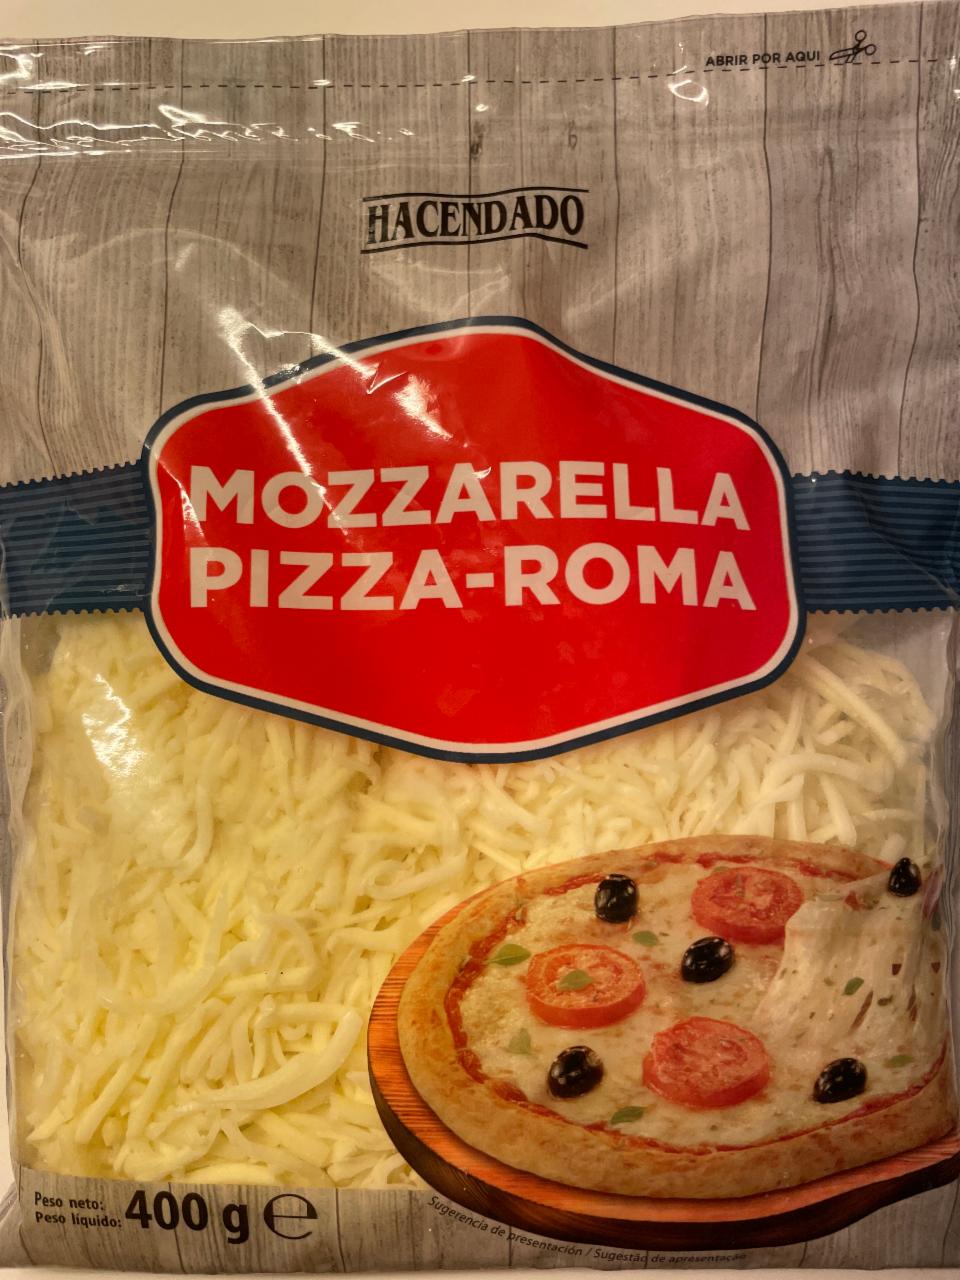 Фото - Mozzarella pizza-roma Hacendado